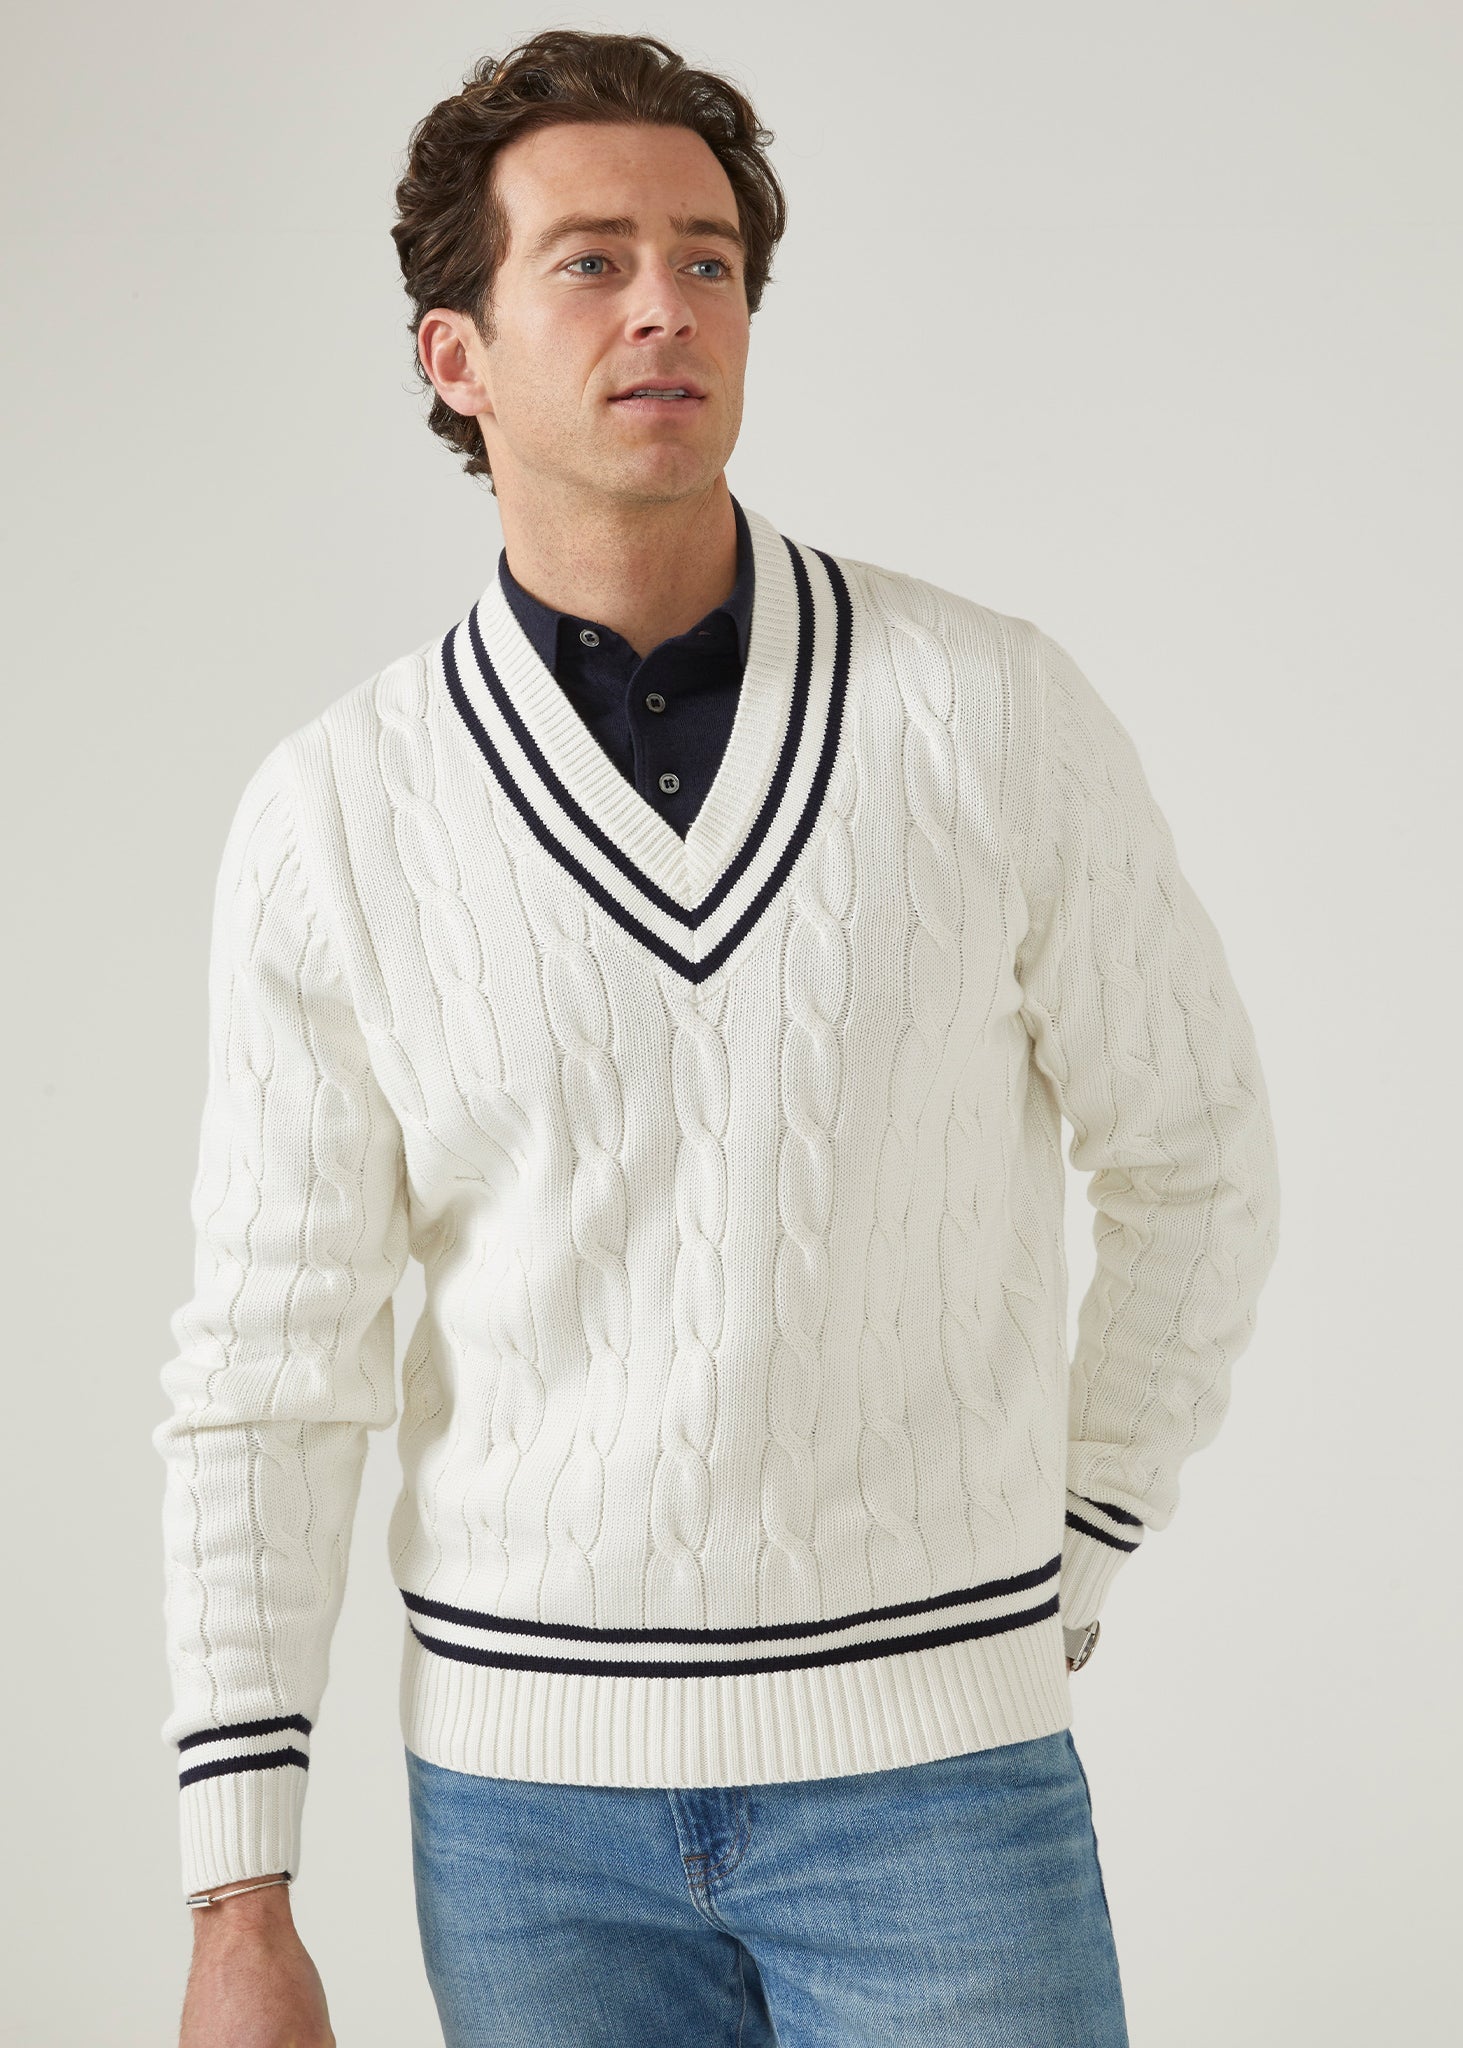 Men's ecru vee neck cable knit cricket jumper with dark navy trim.